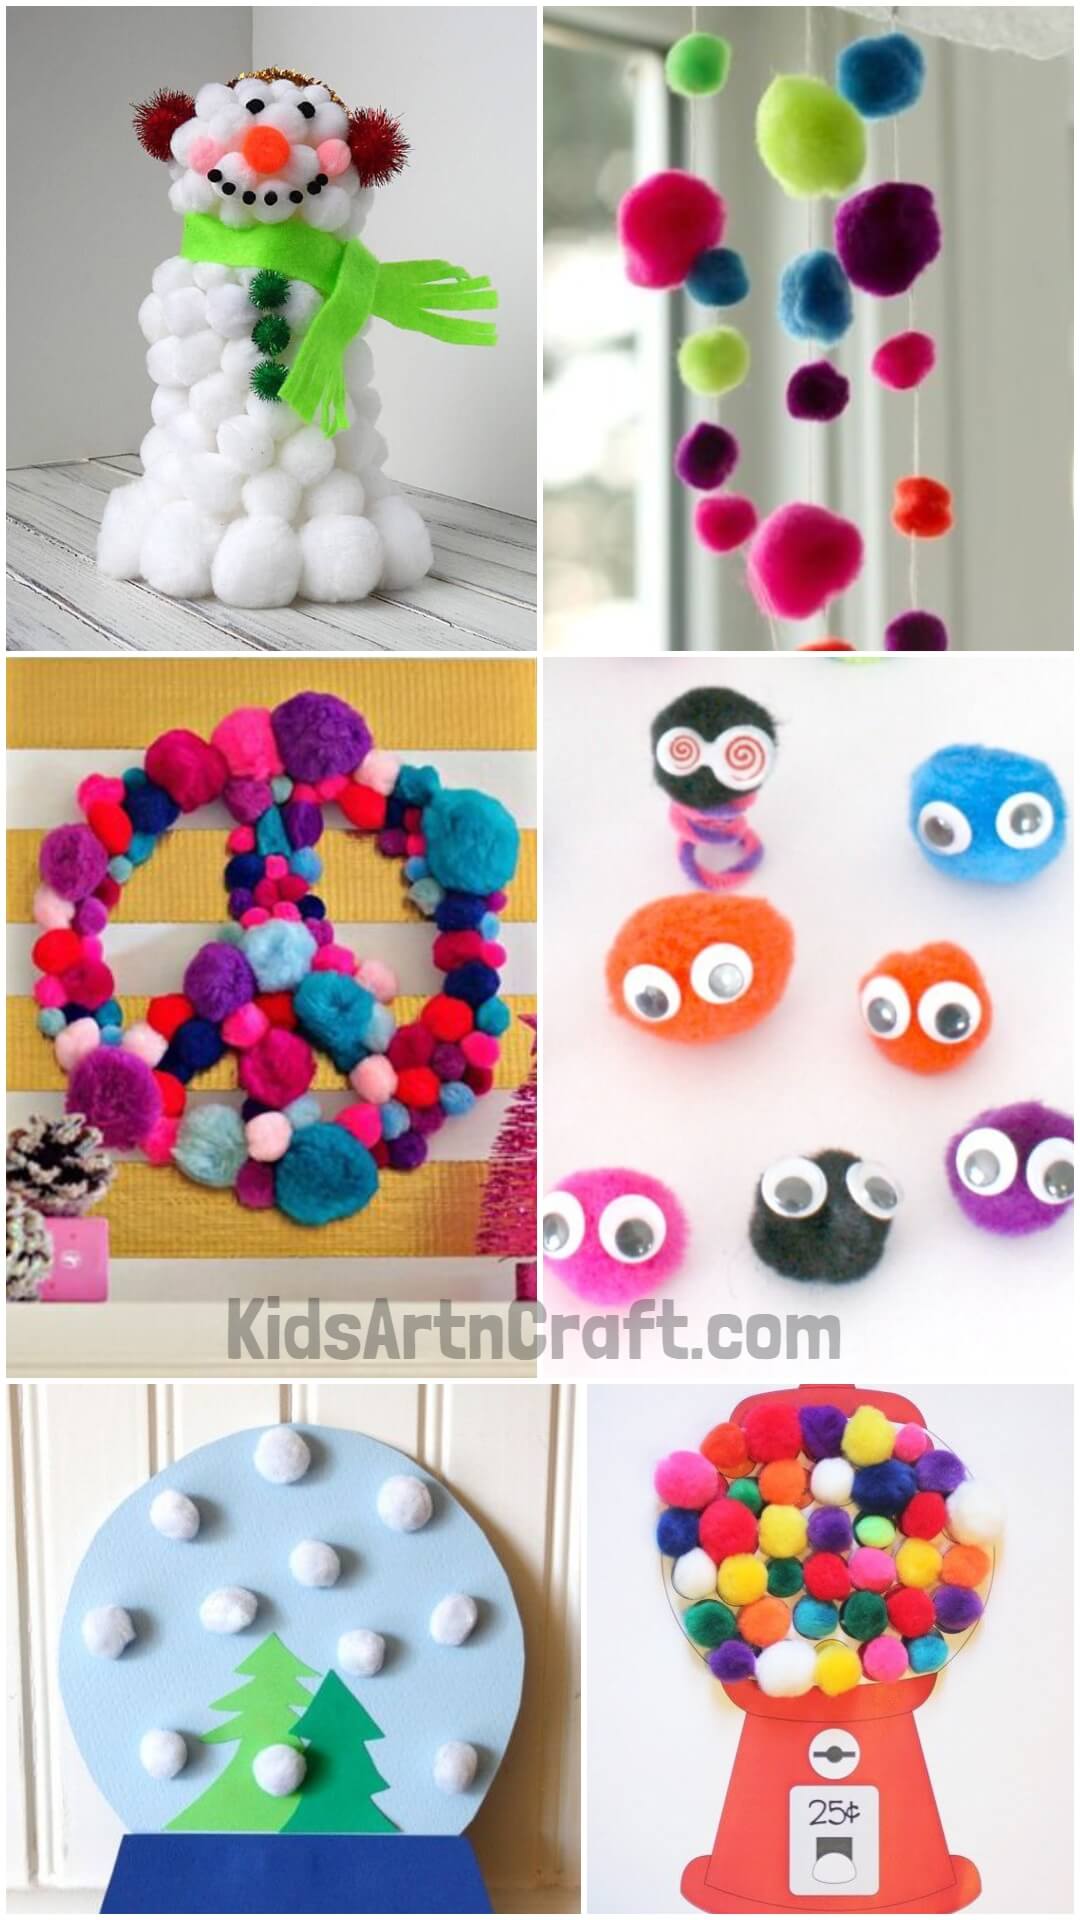 Lovely Pom Pom crafts for kids